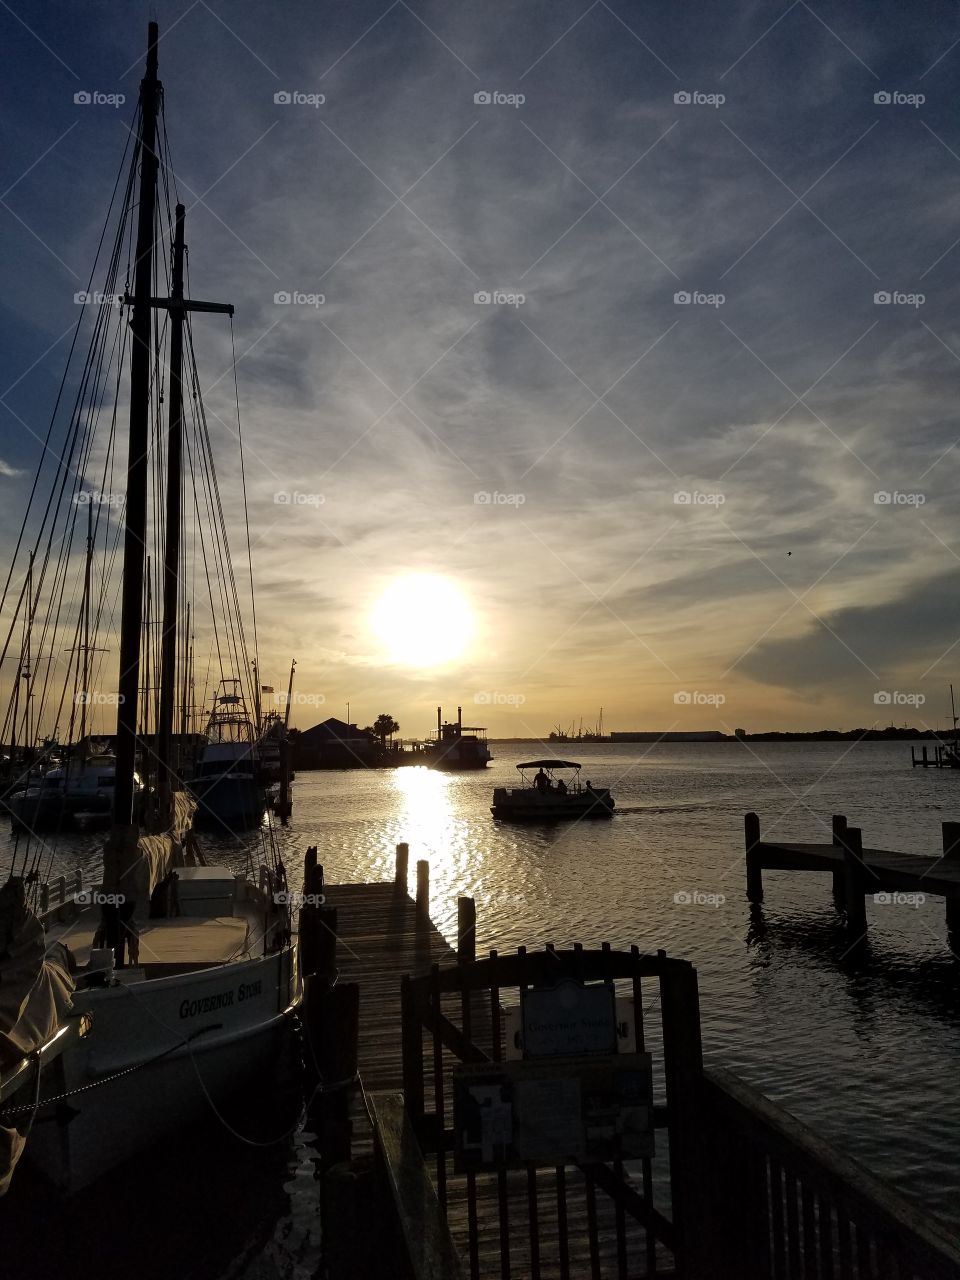 Sunset sailing